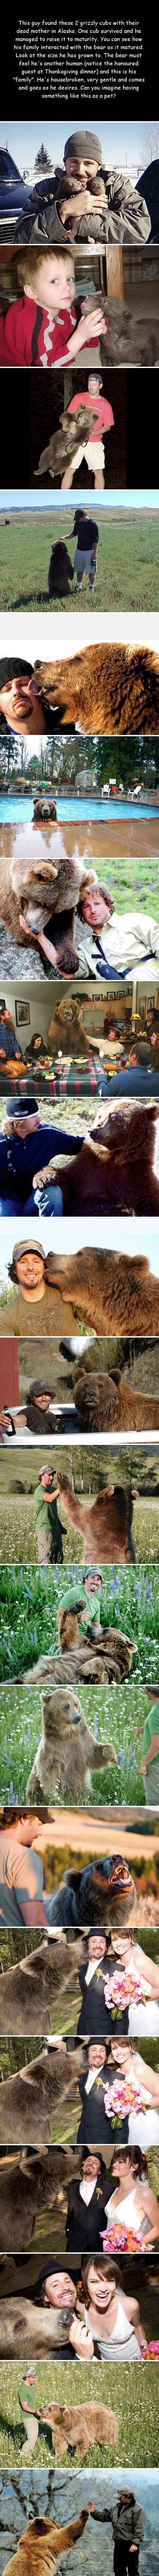 Now I kinda want a pet bear….